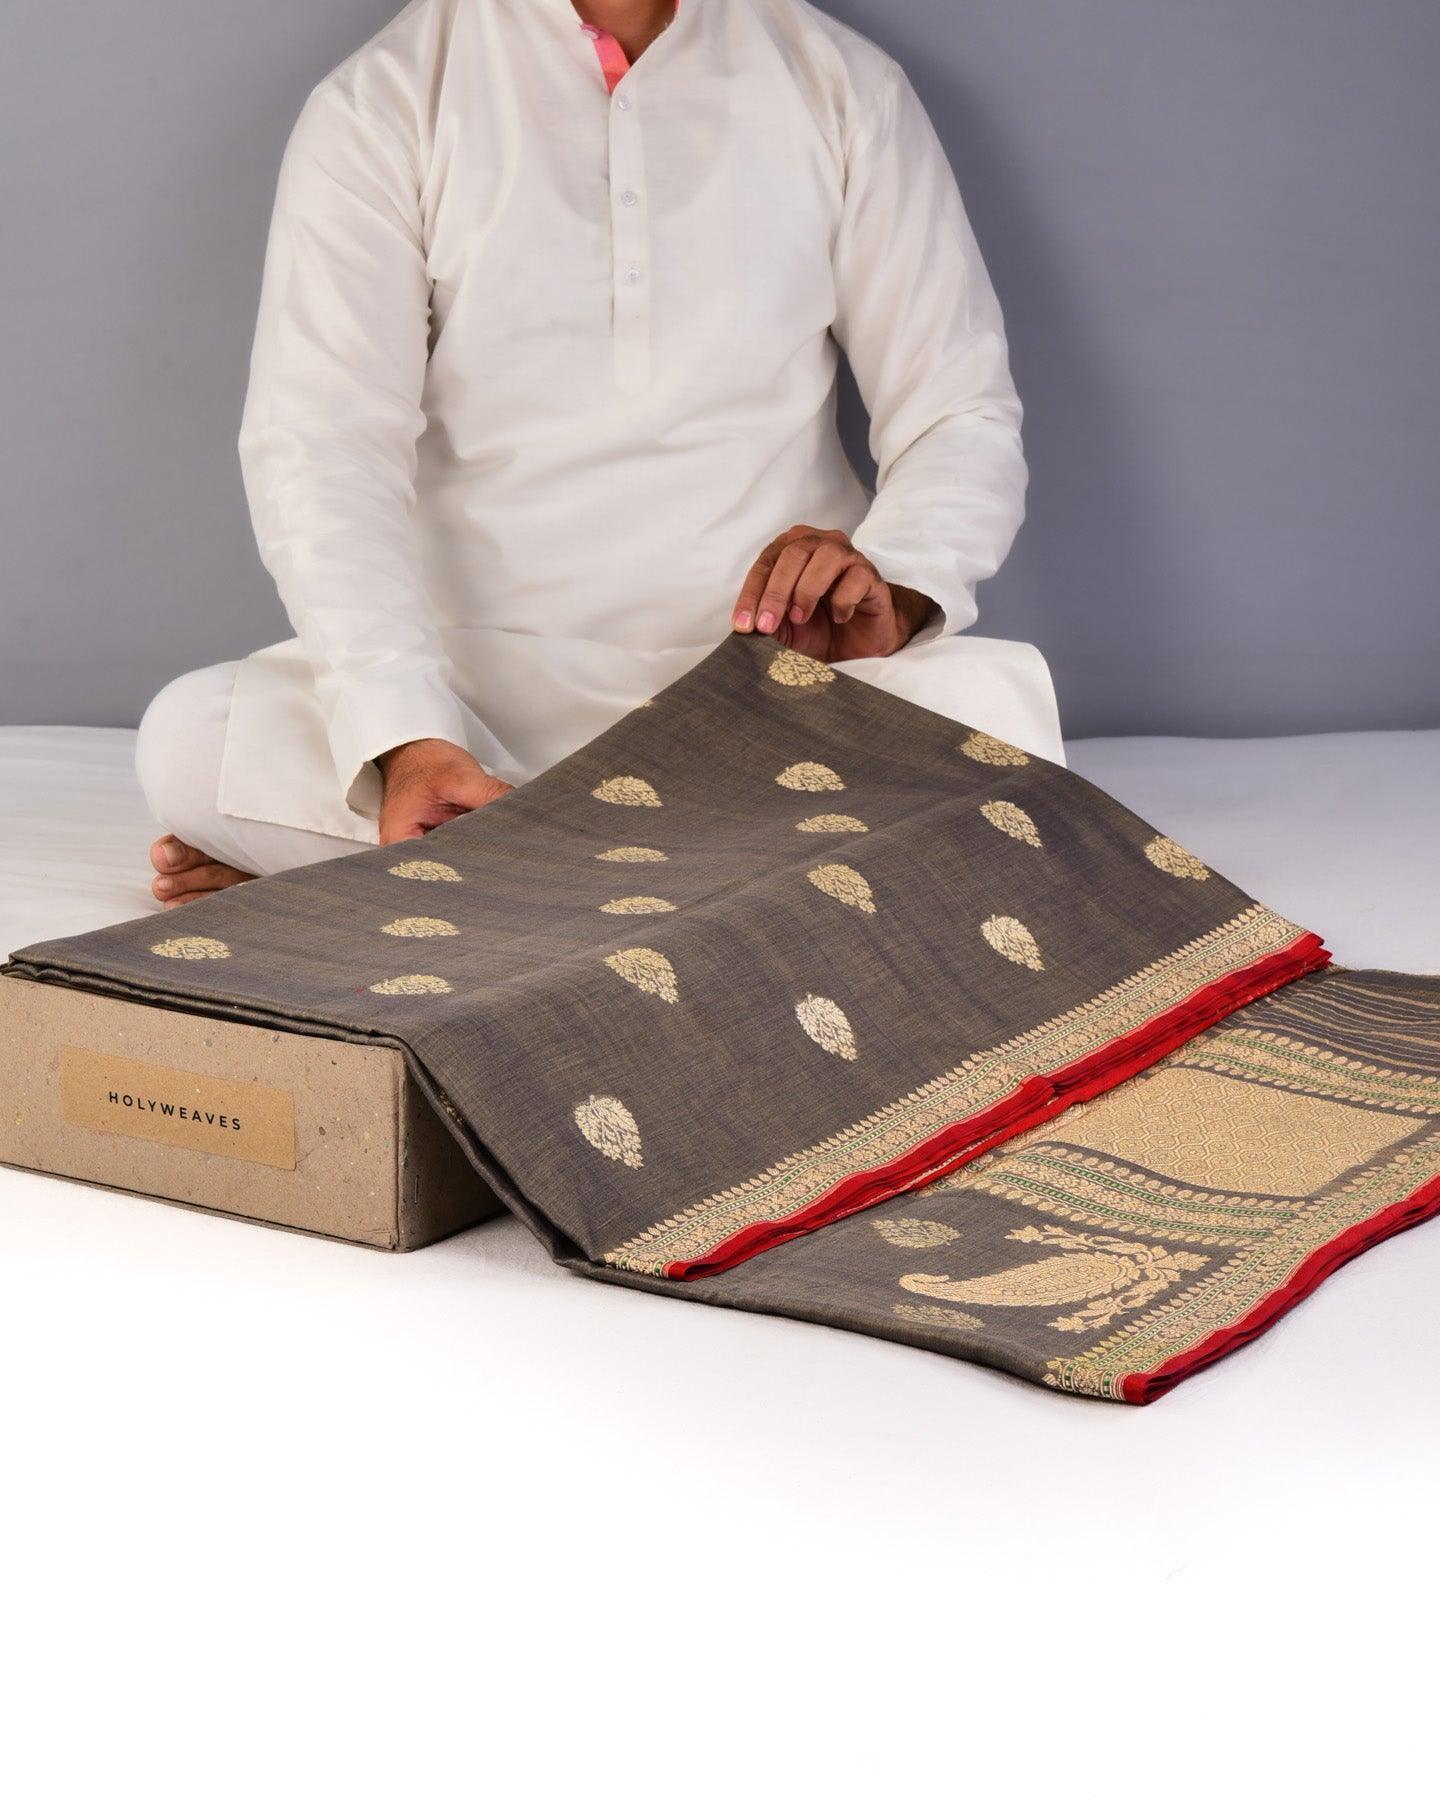 Gray Banarasi Buti Ektara Cutwork Brocade Handloom Cotton Saree - By HolyWeaves, Benares